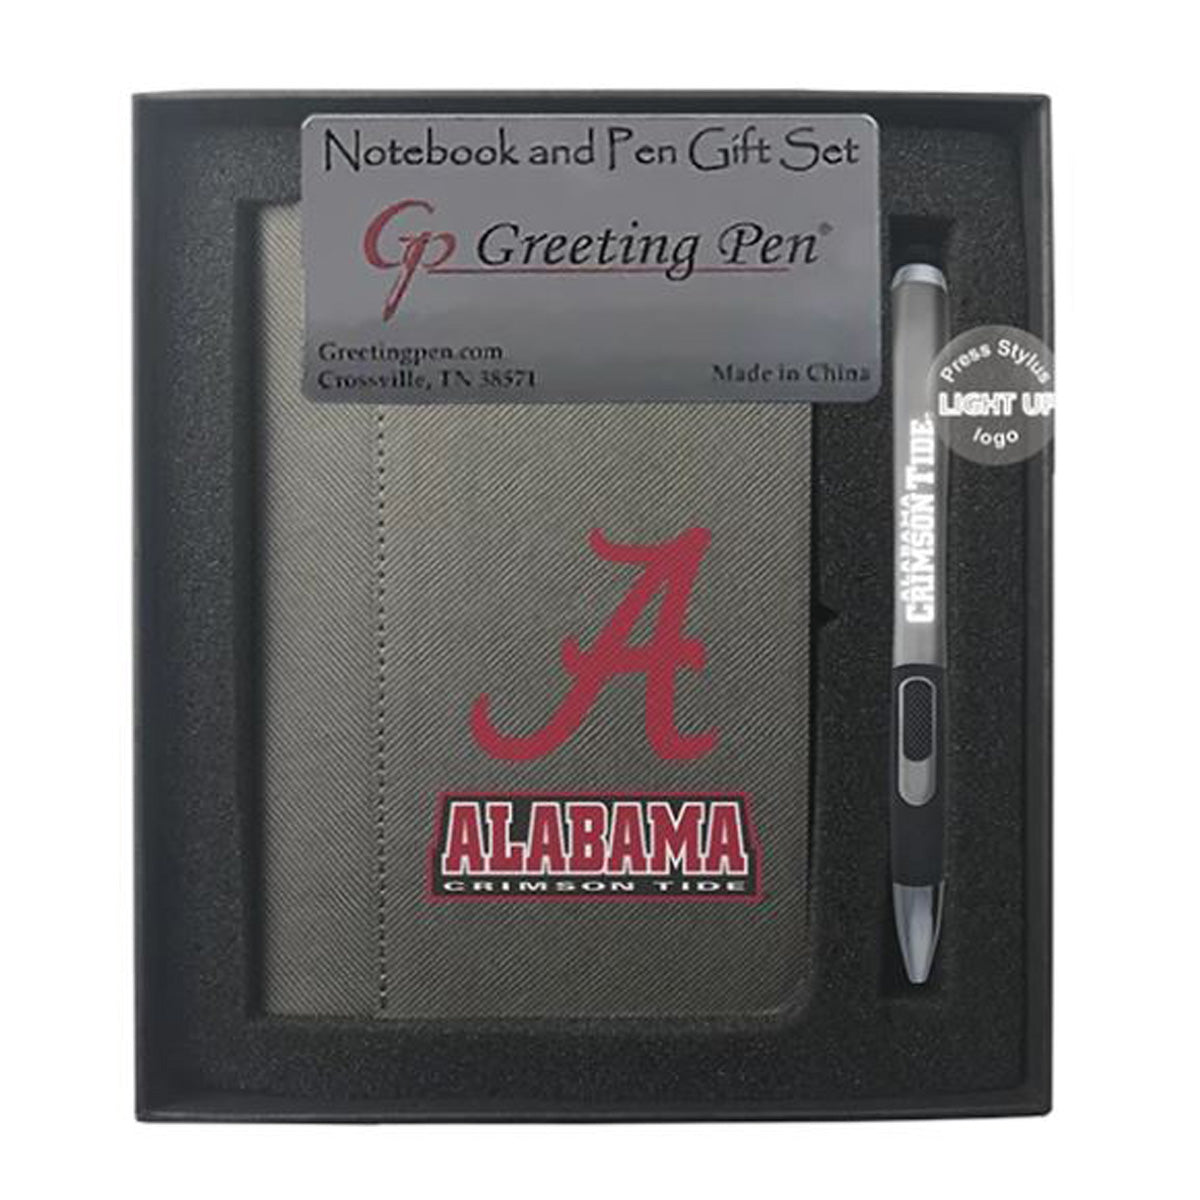 University of Alabama Small Notebook & Light Up Pen Set